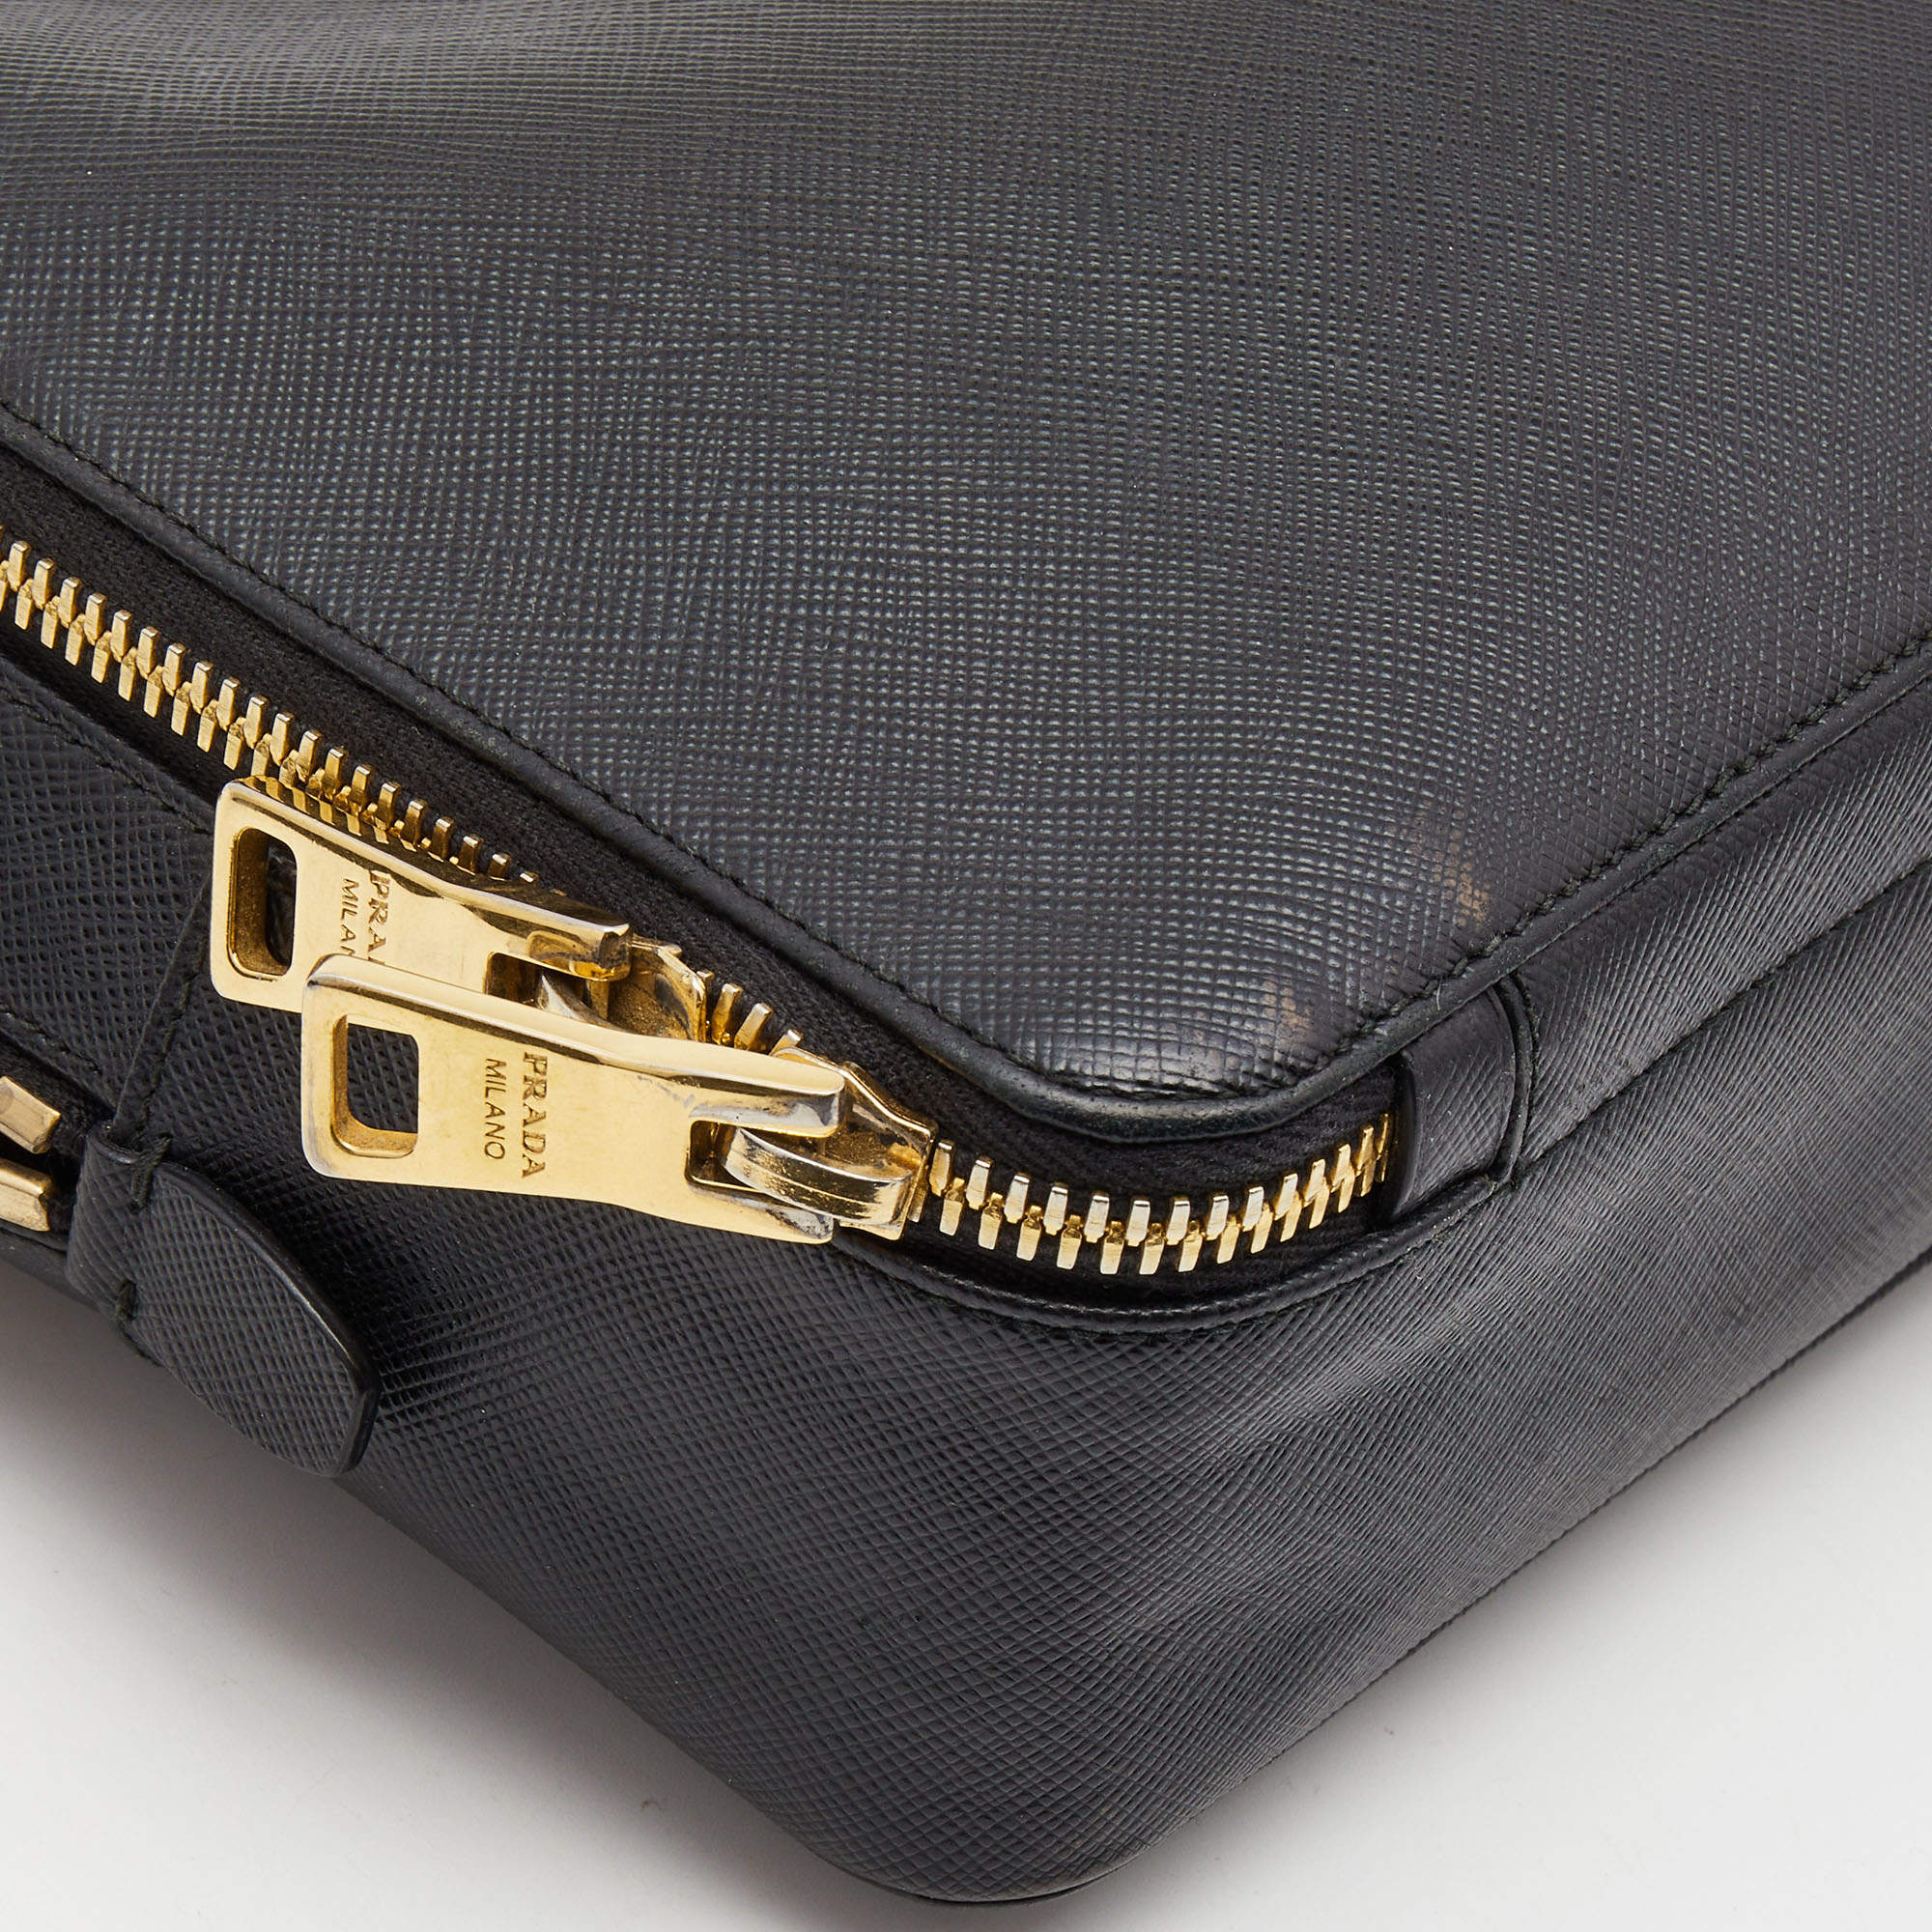 Prada BN924k Saffiano Lux Flap Bag.